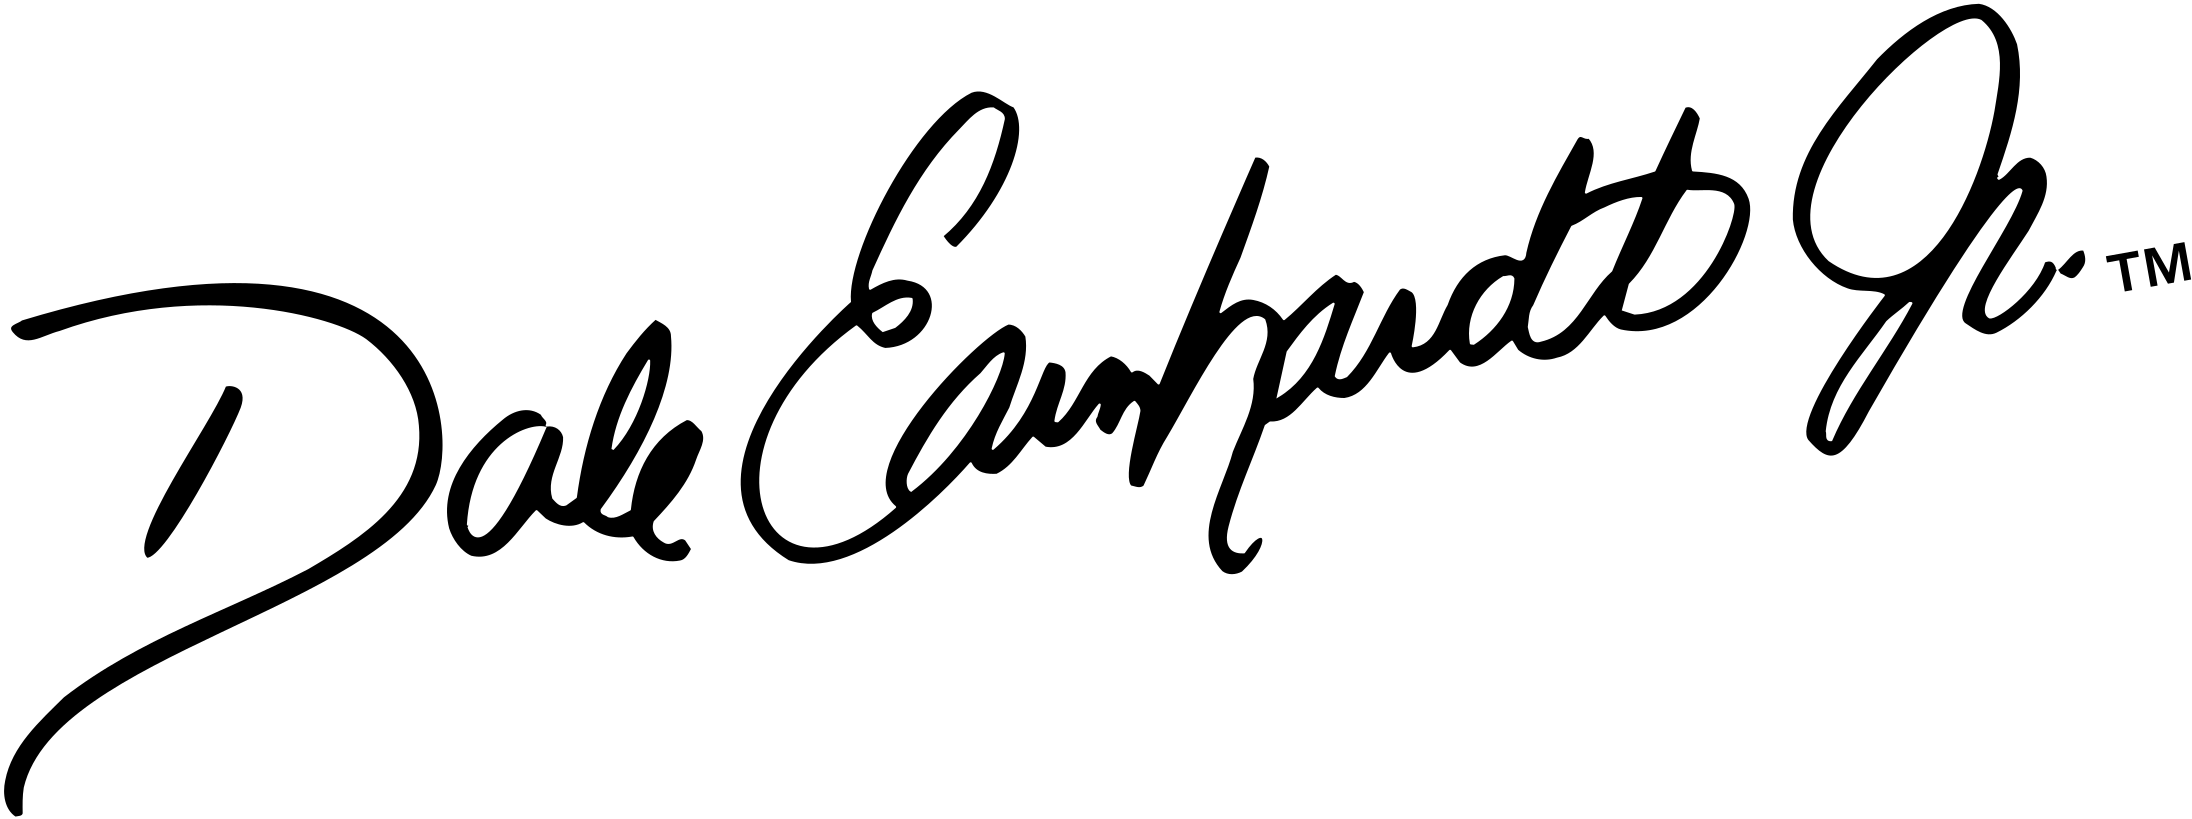 Dale Earnhardt Jr Signature Logo Png Transparent - Dale Earnhardt Jr Signature (2400x2400), Png Download